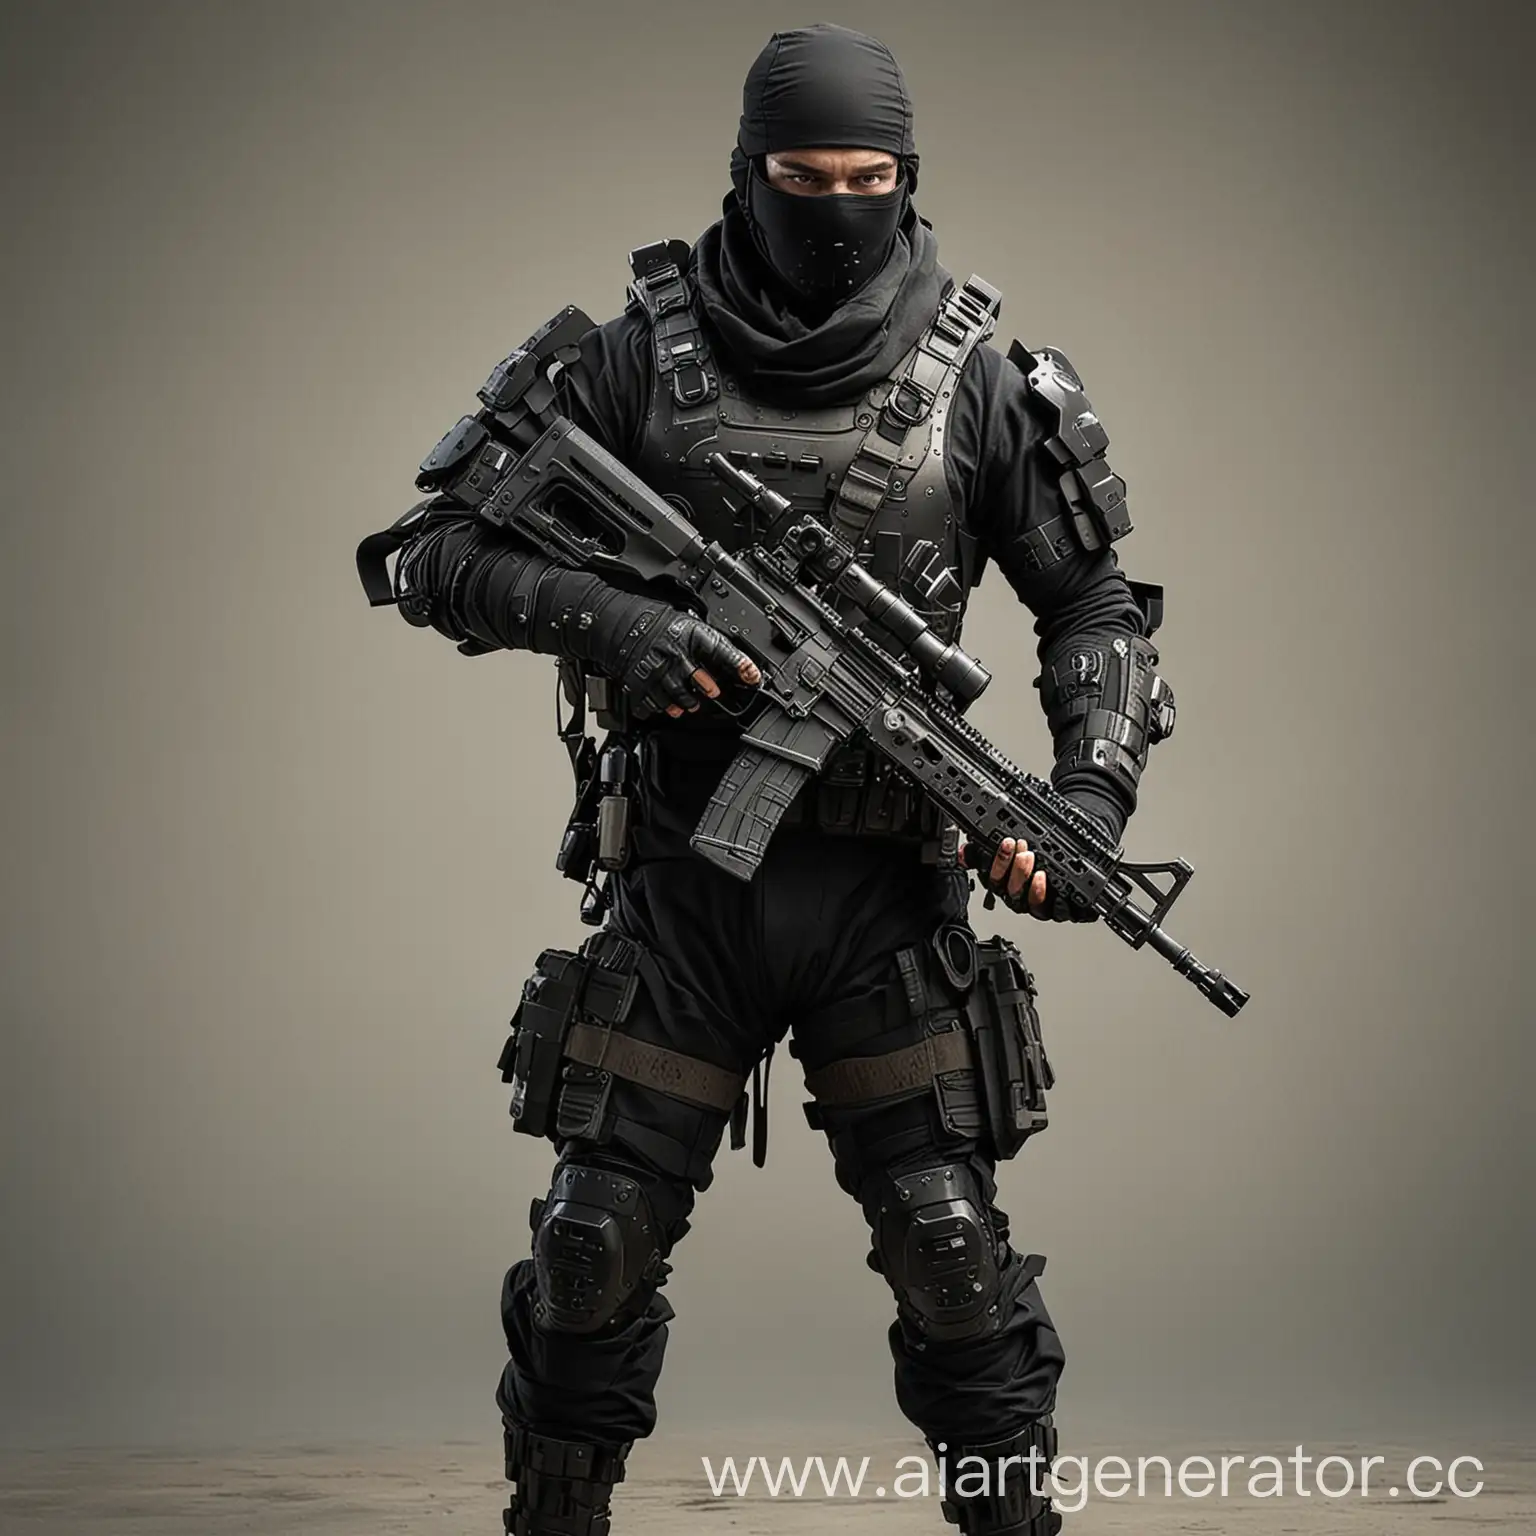 Special forces, full body, future armor, ninja, ak gun